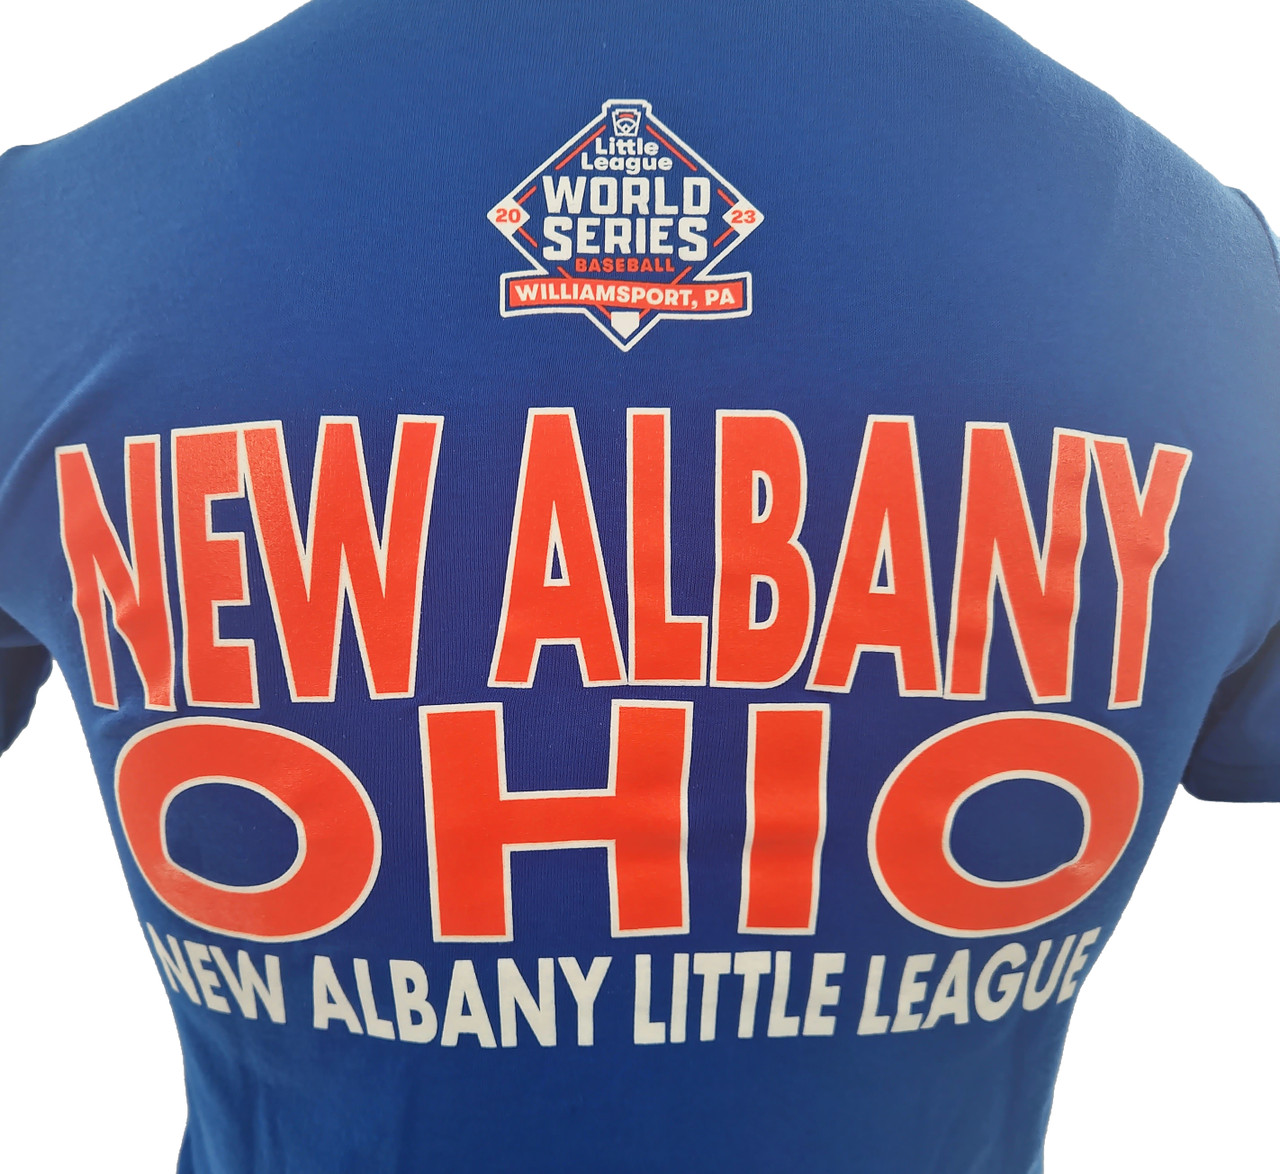 New Albany Ohio Little League